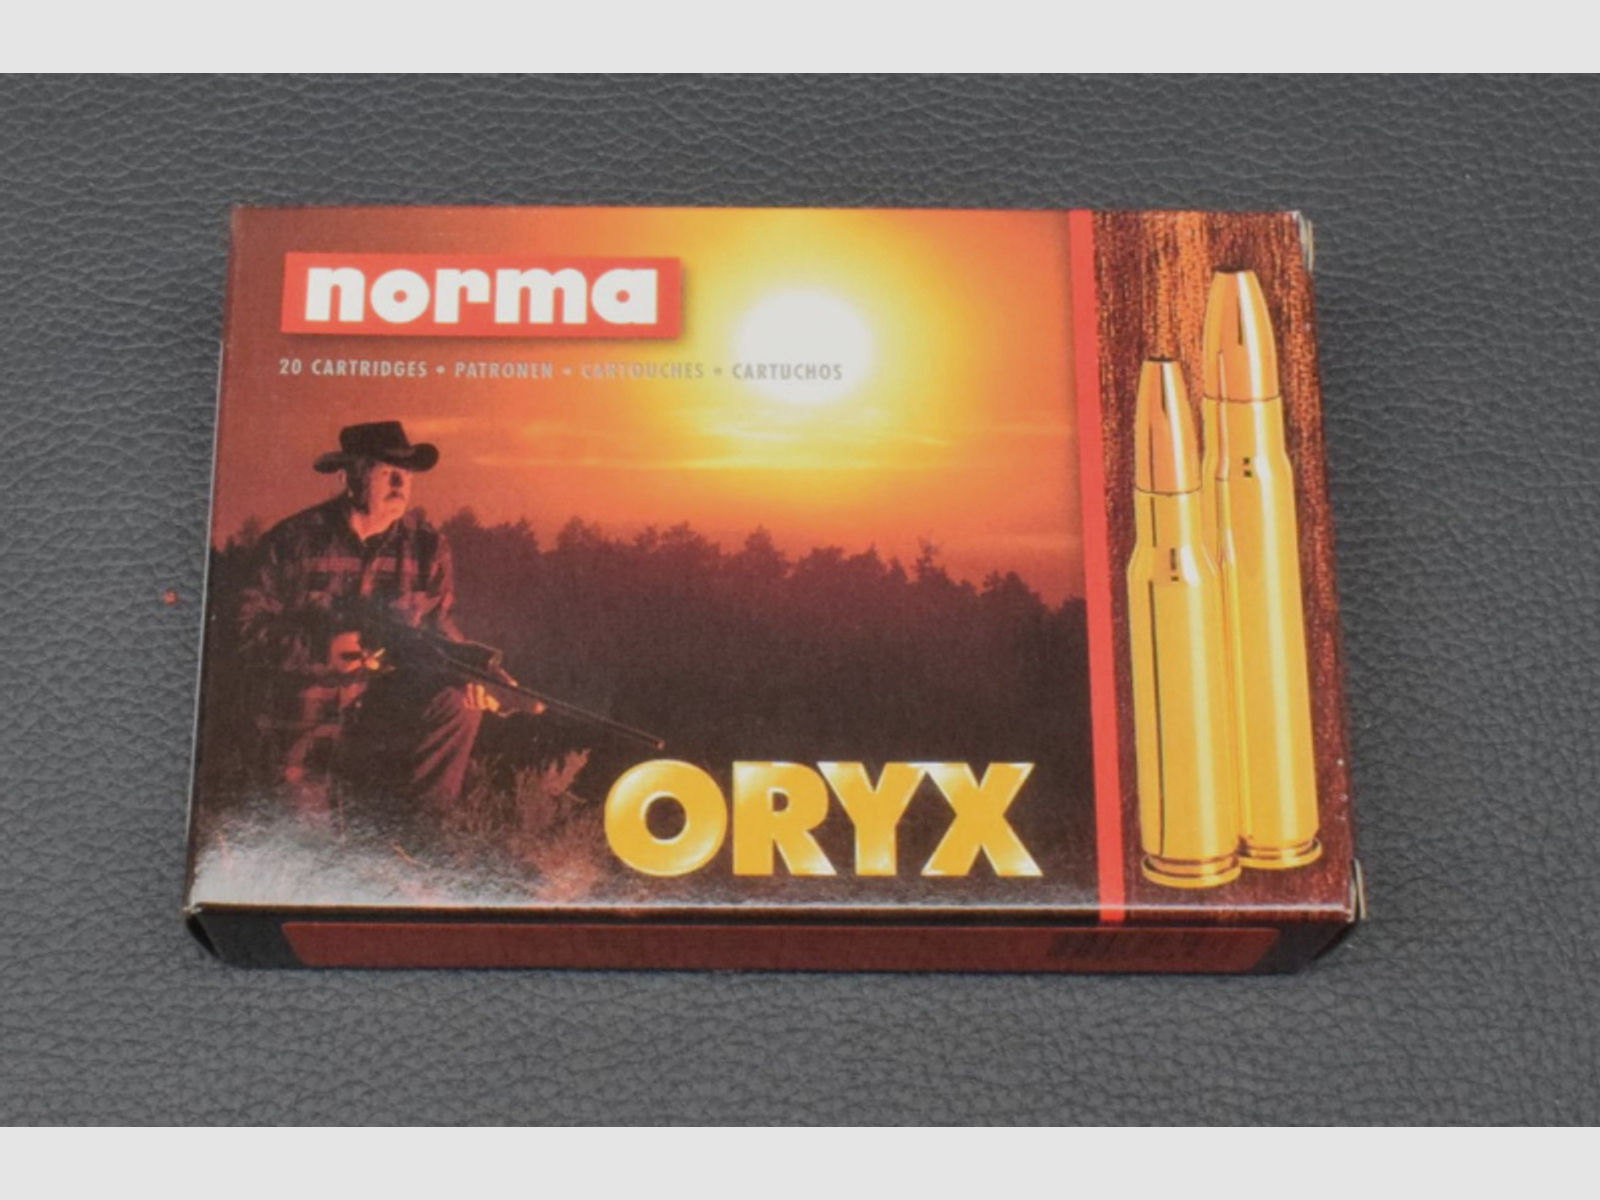 20 Norma Patronen Kaliber 7mm RemMag Oryx 10,1g/145gr , aus Geschäftsauflösung zum Sonderpreis